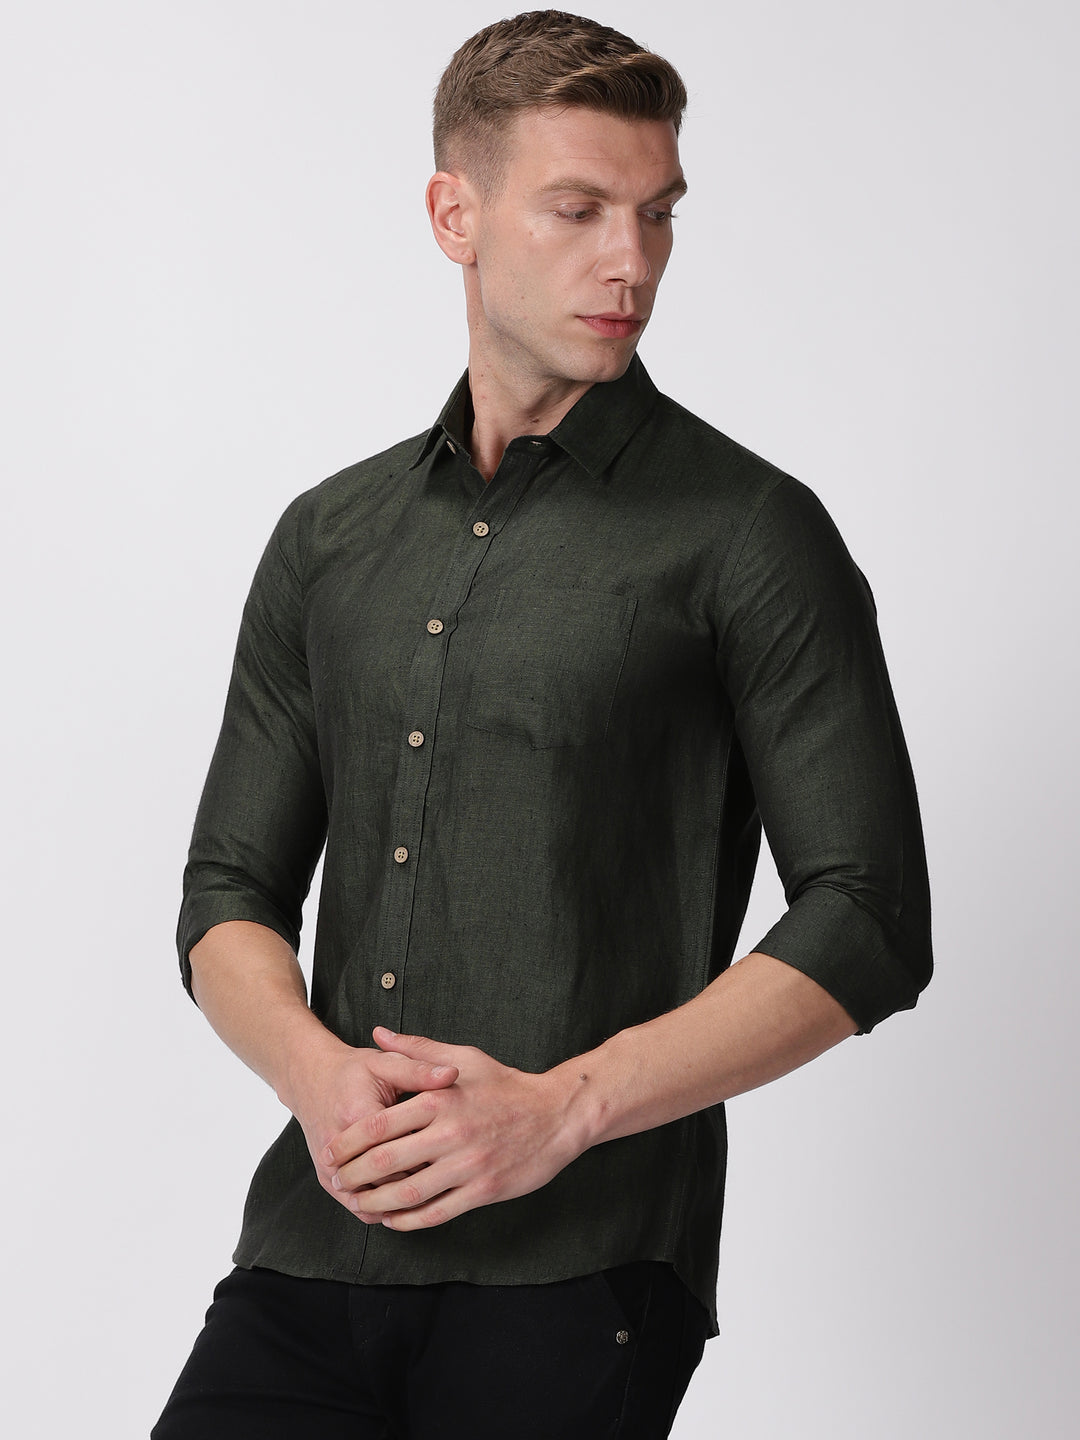 Harvey - Pure Linen Full Sleeve Shirt - Forest Green